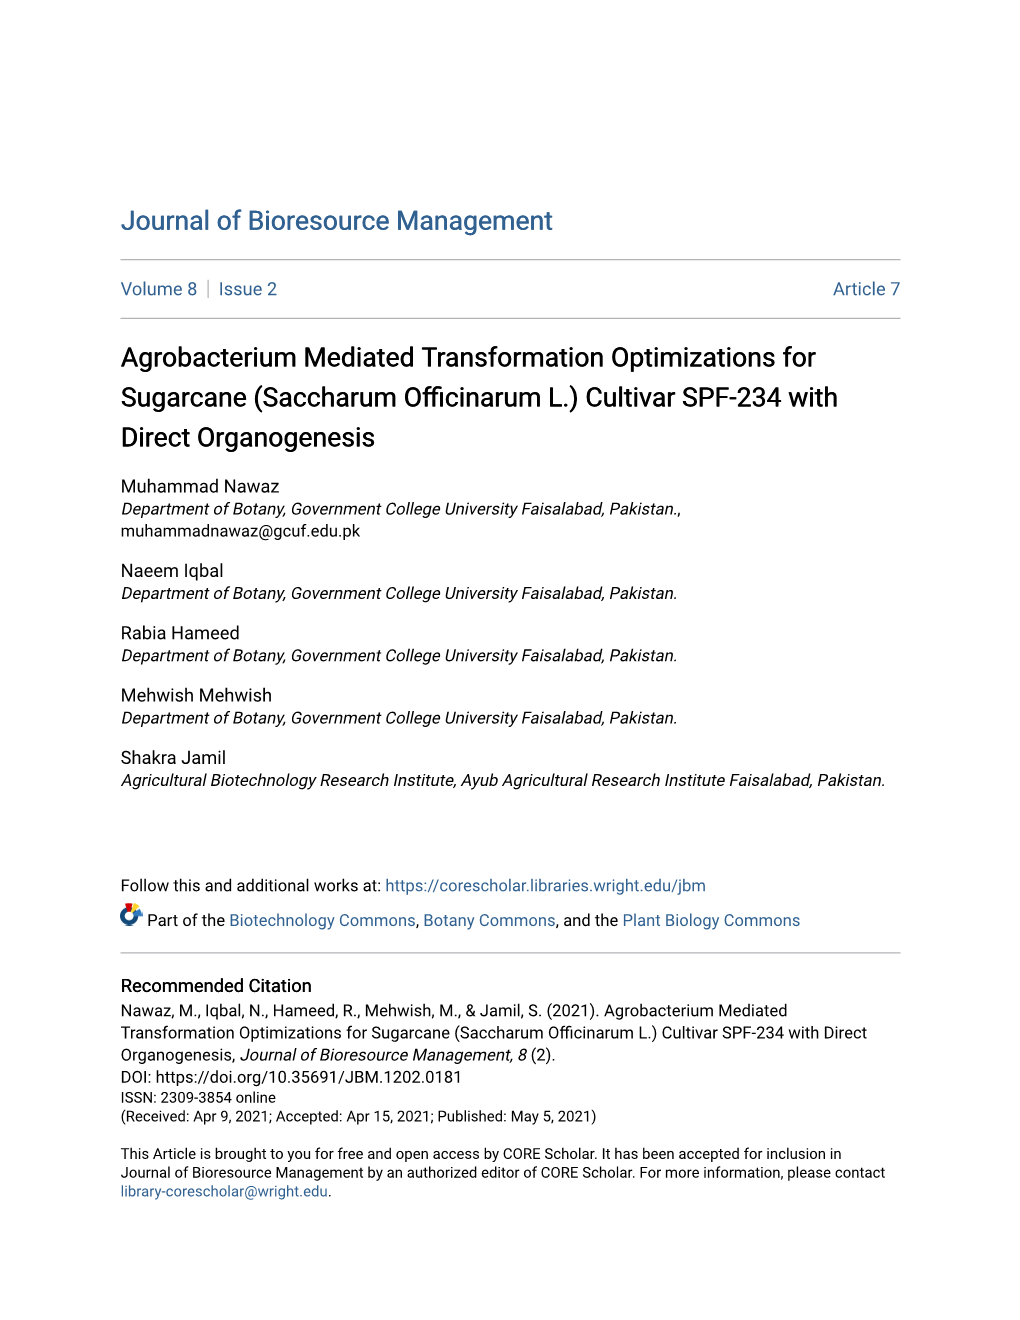 Agrobacterium Mediated Transformation Optimizations for Sugarcane (Saccharum Officinarum L.) Cultivar SPF-234 with Direct Organogenesis